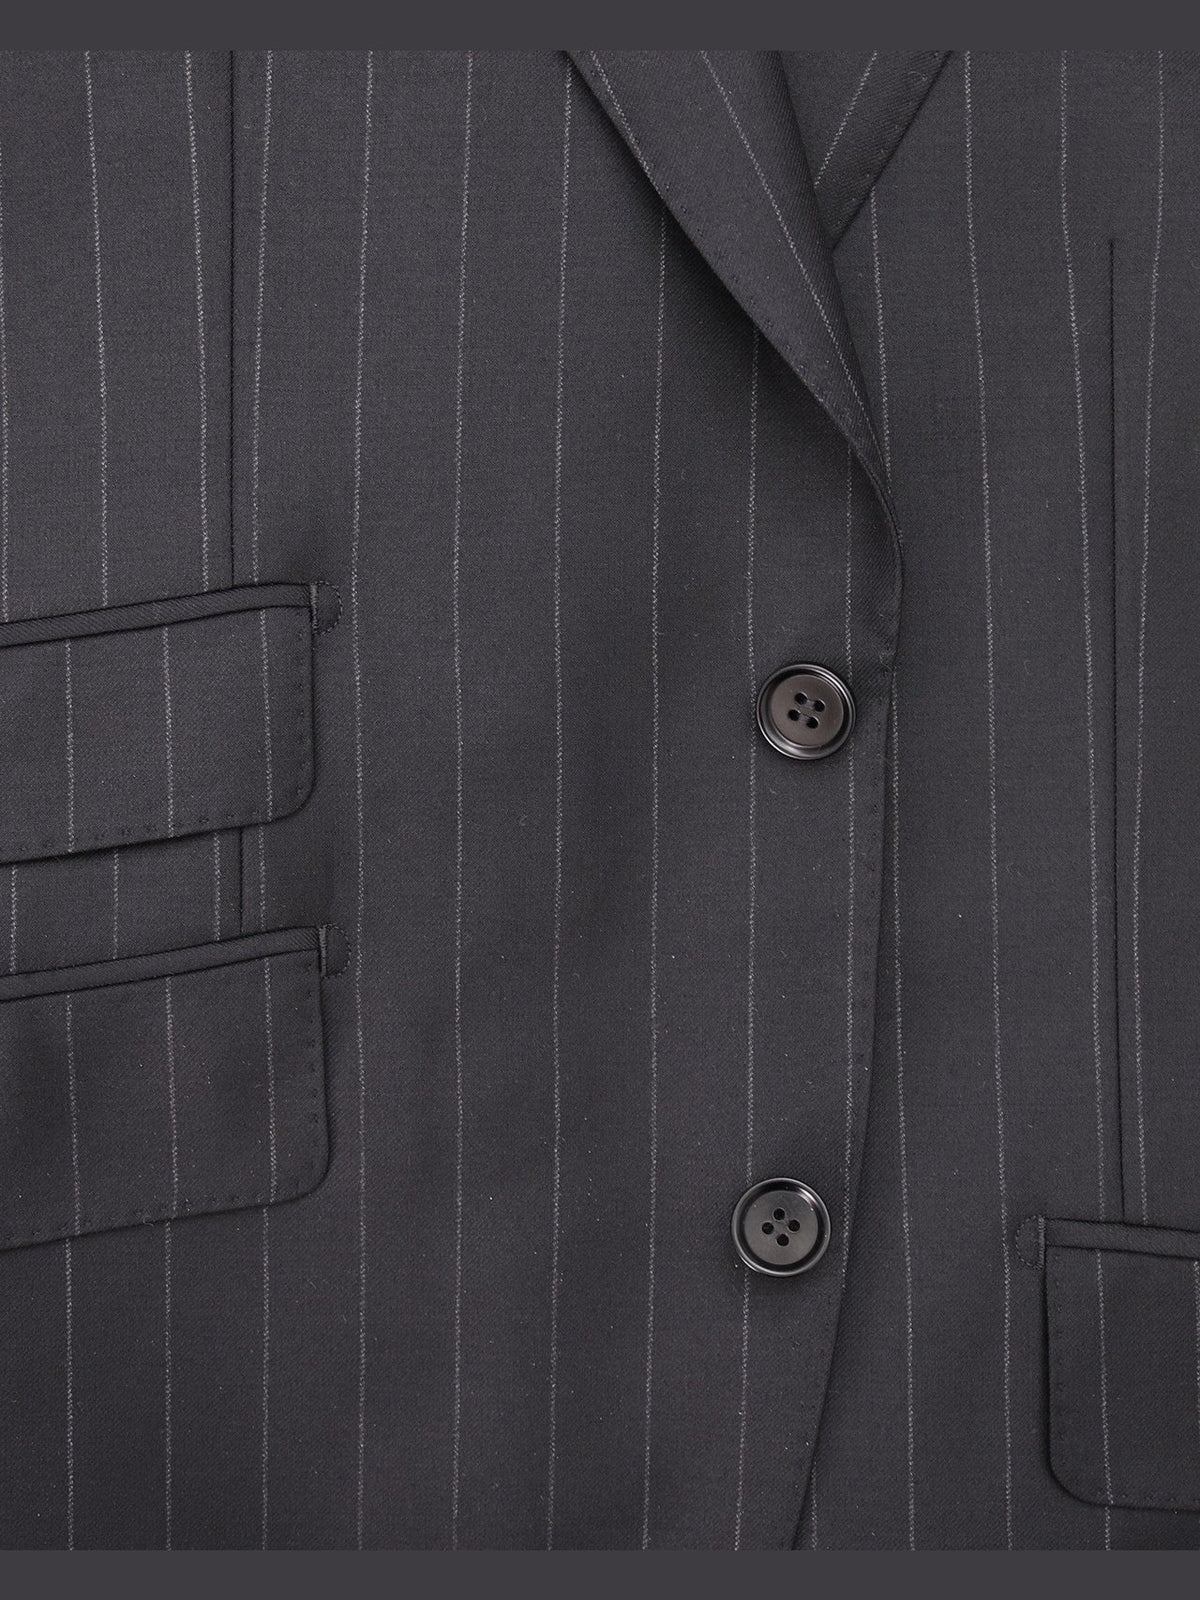 Napoli SUITS Napoli Mens Black Pinstripe 100% Loro Piana Italian Wool Slim Fit Suit